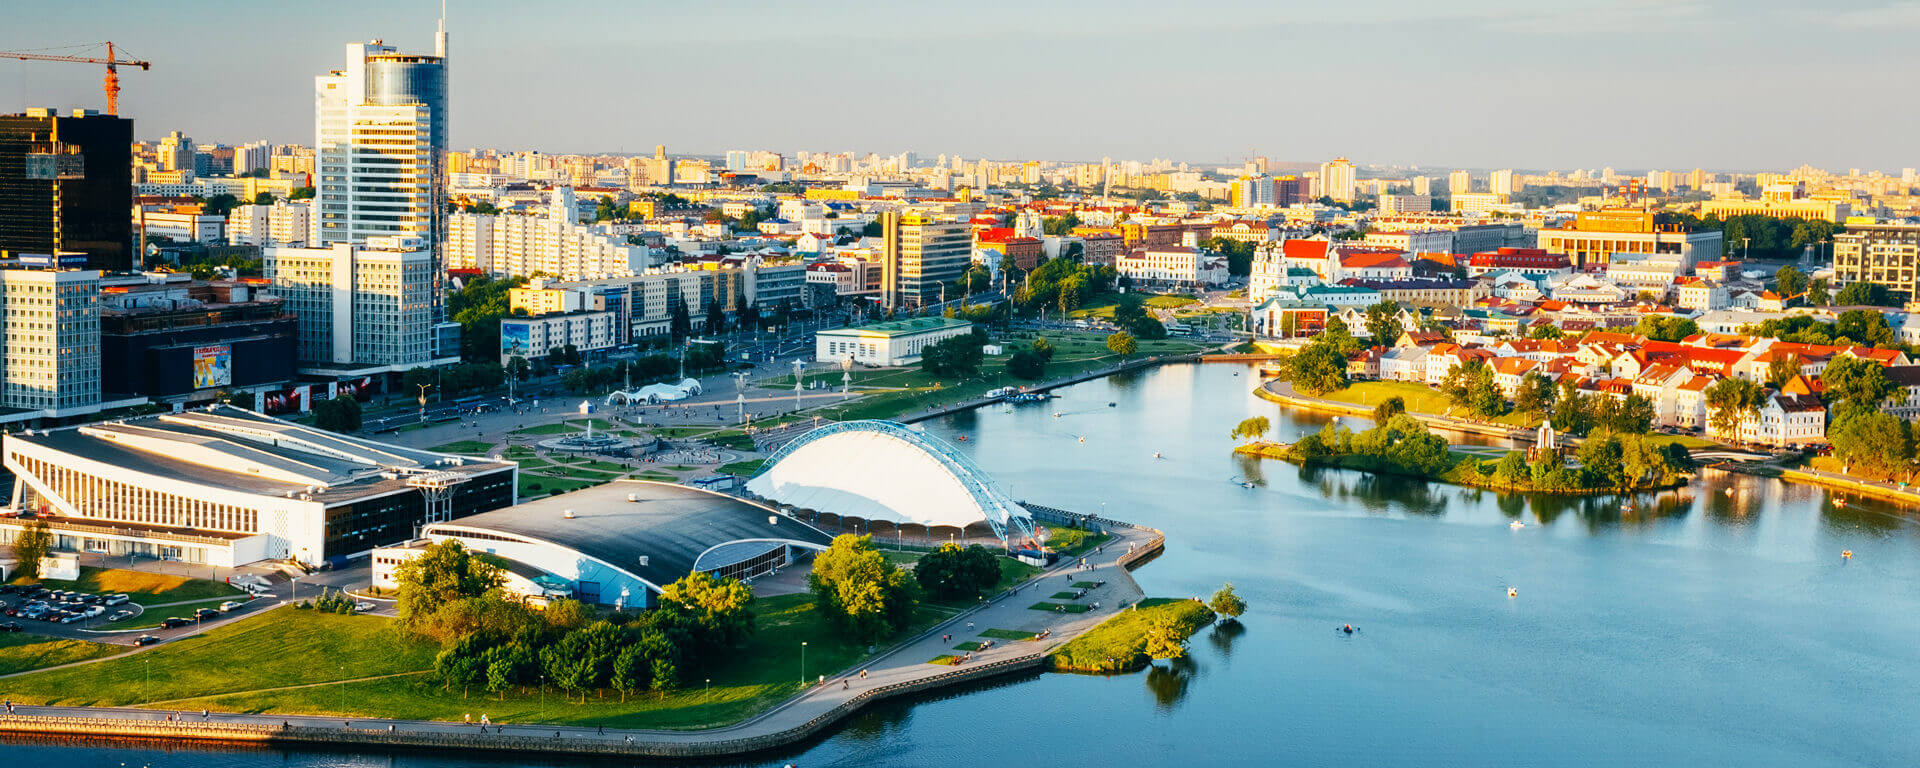 Minsk - A beautiful and enigmatic city rebuilt after World war devastation